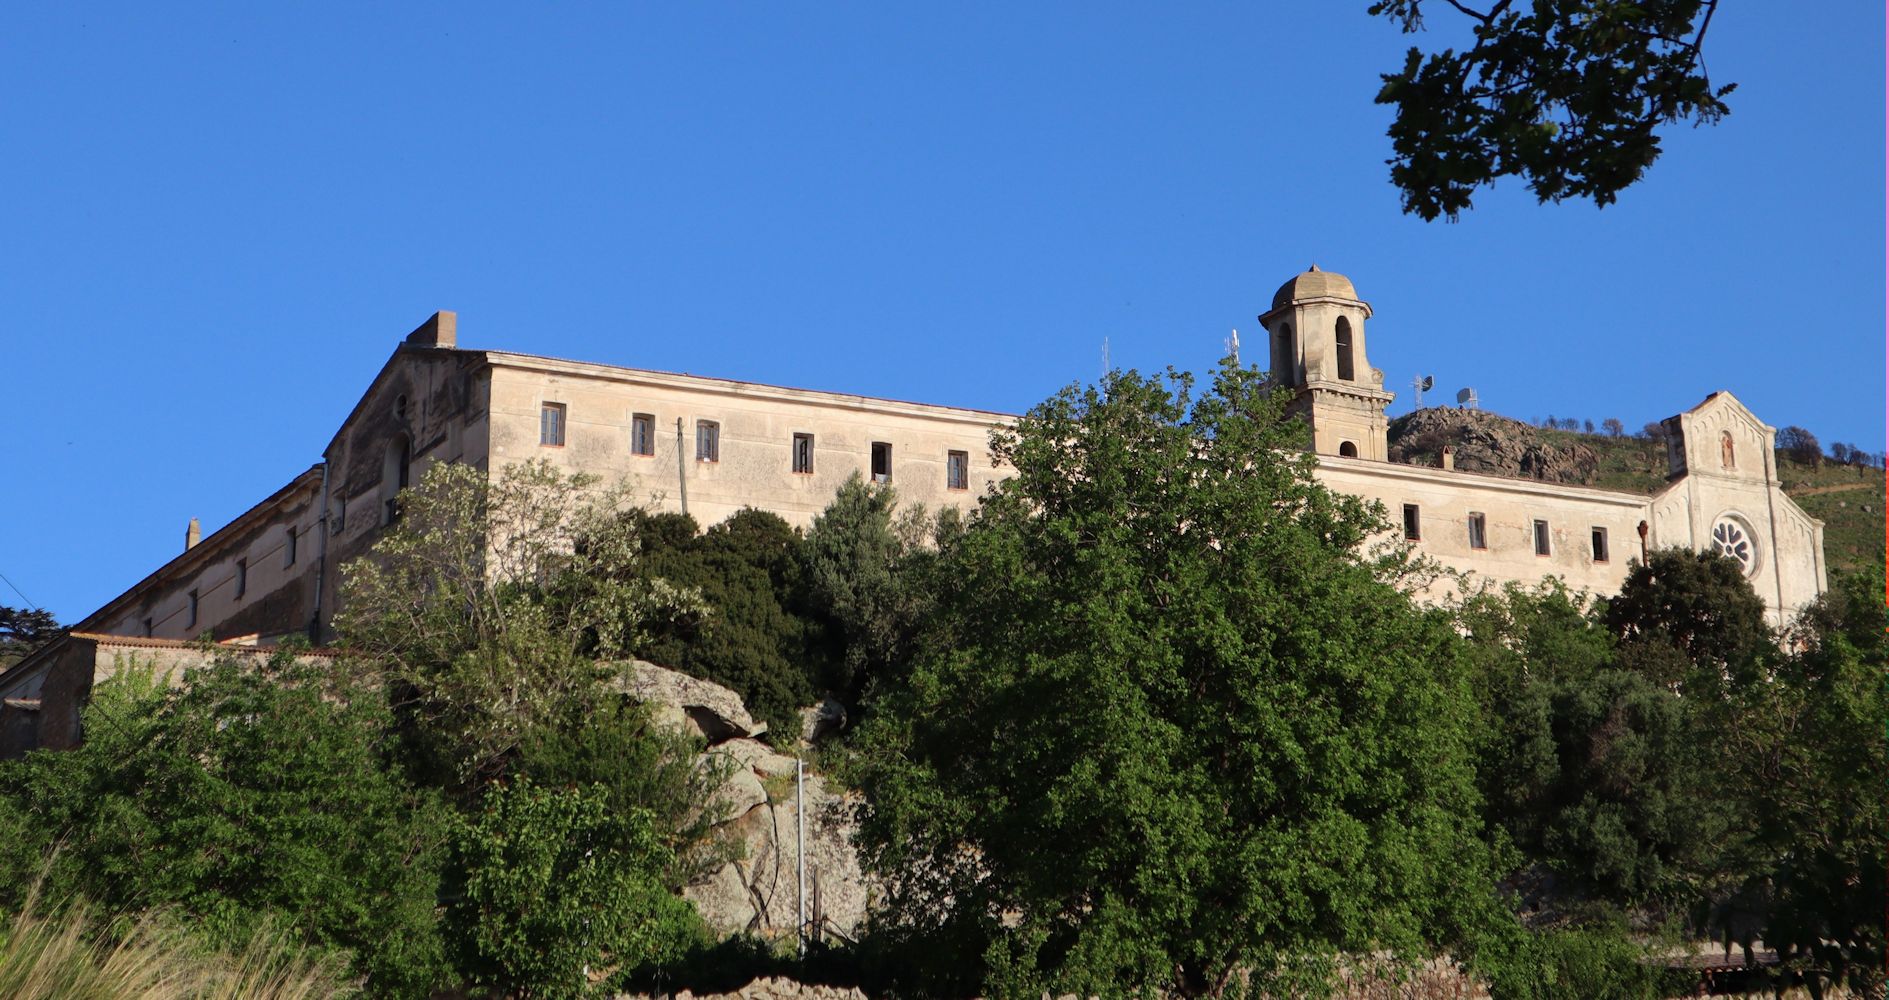 ehemaliges Kloster San Francisco de la Pieve d'Aregno, heute Kloster San Domenicu in Corbara